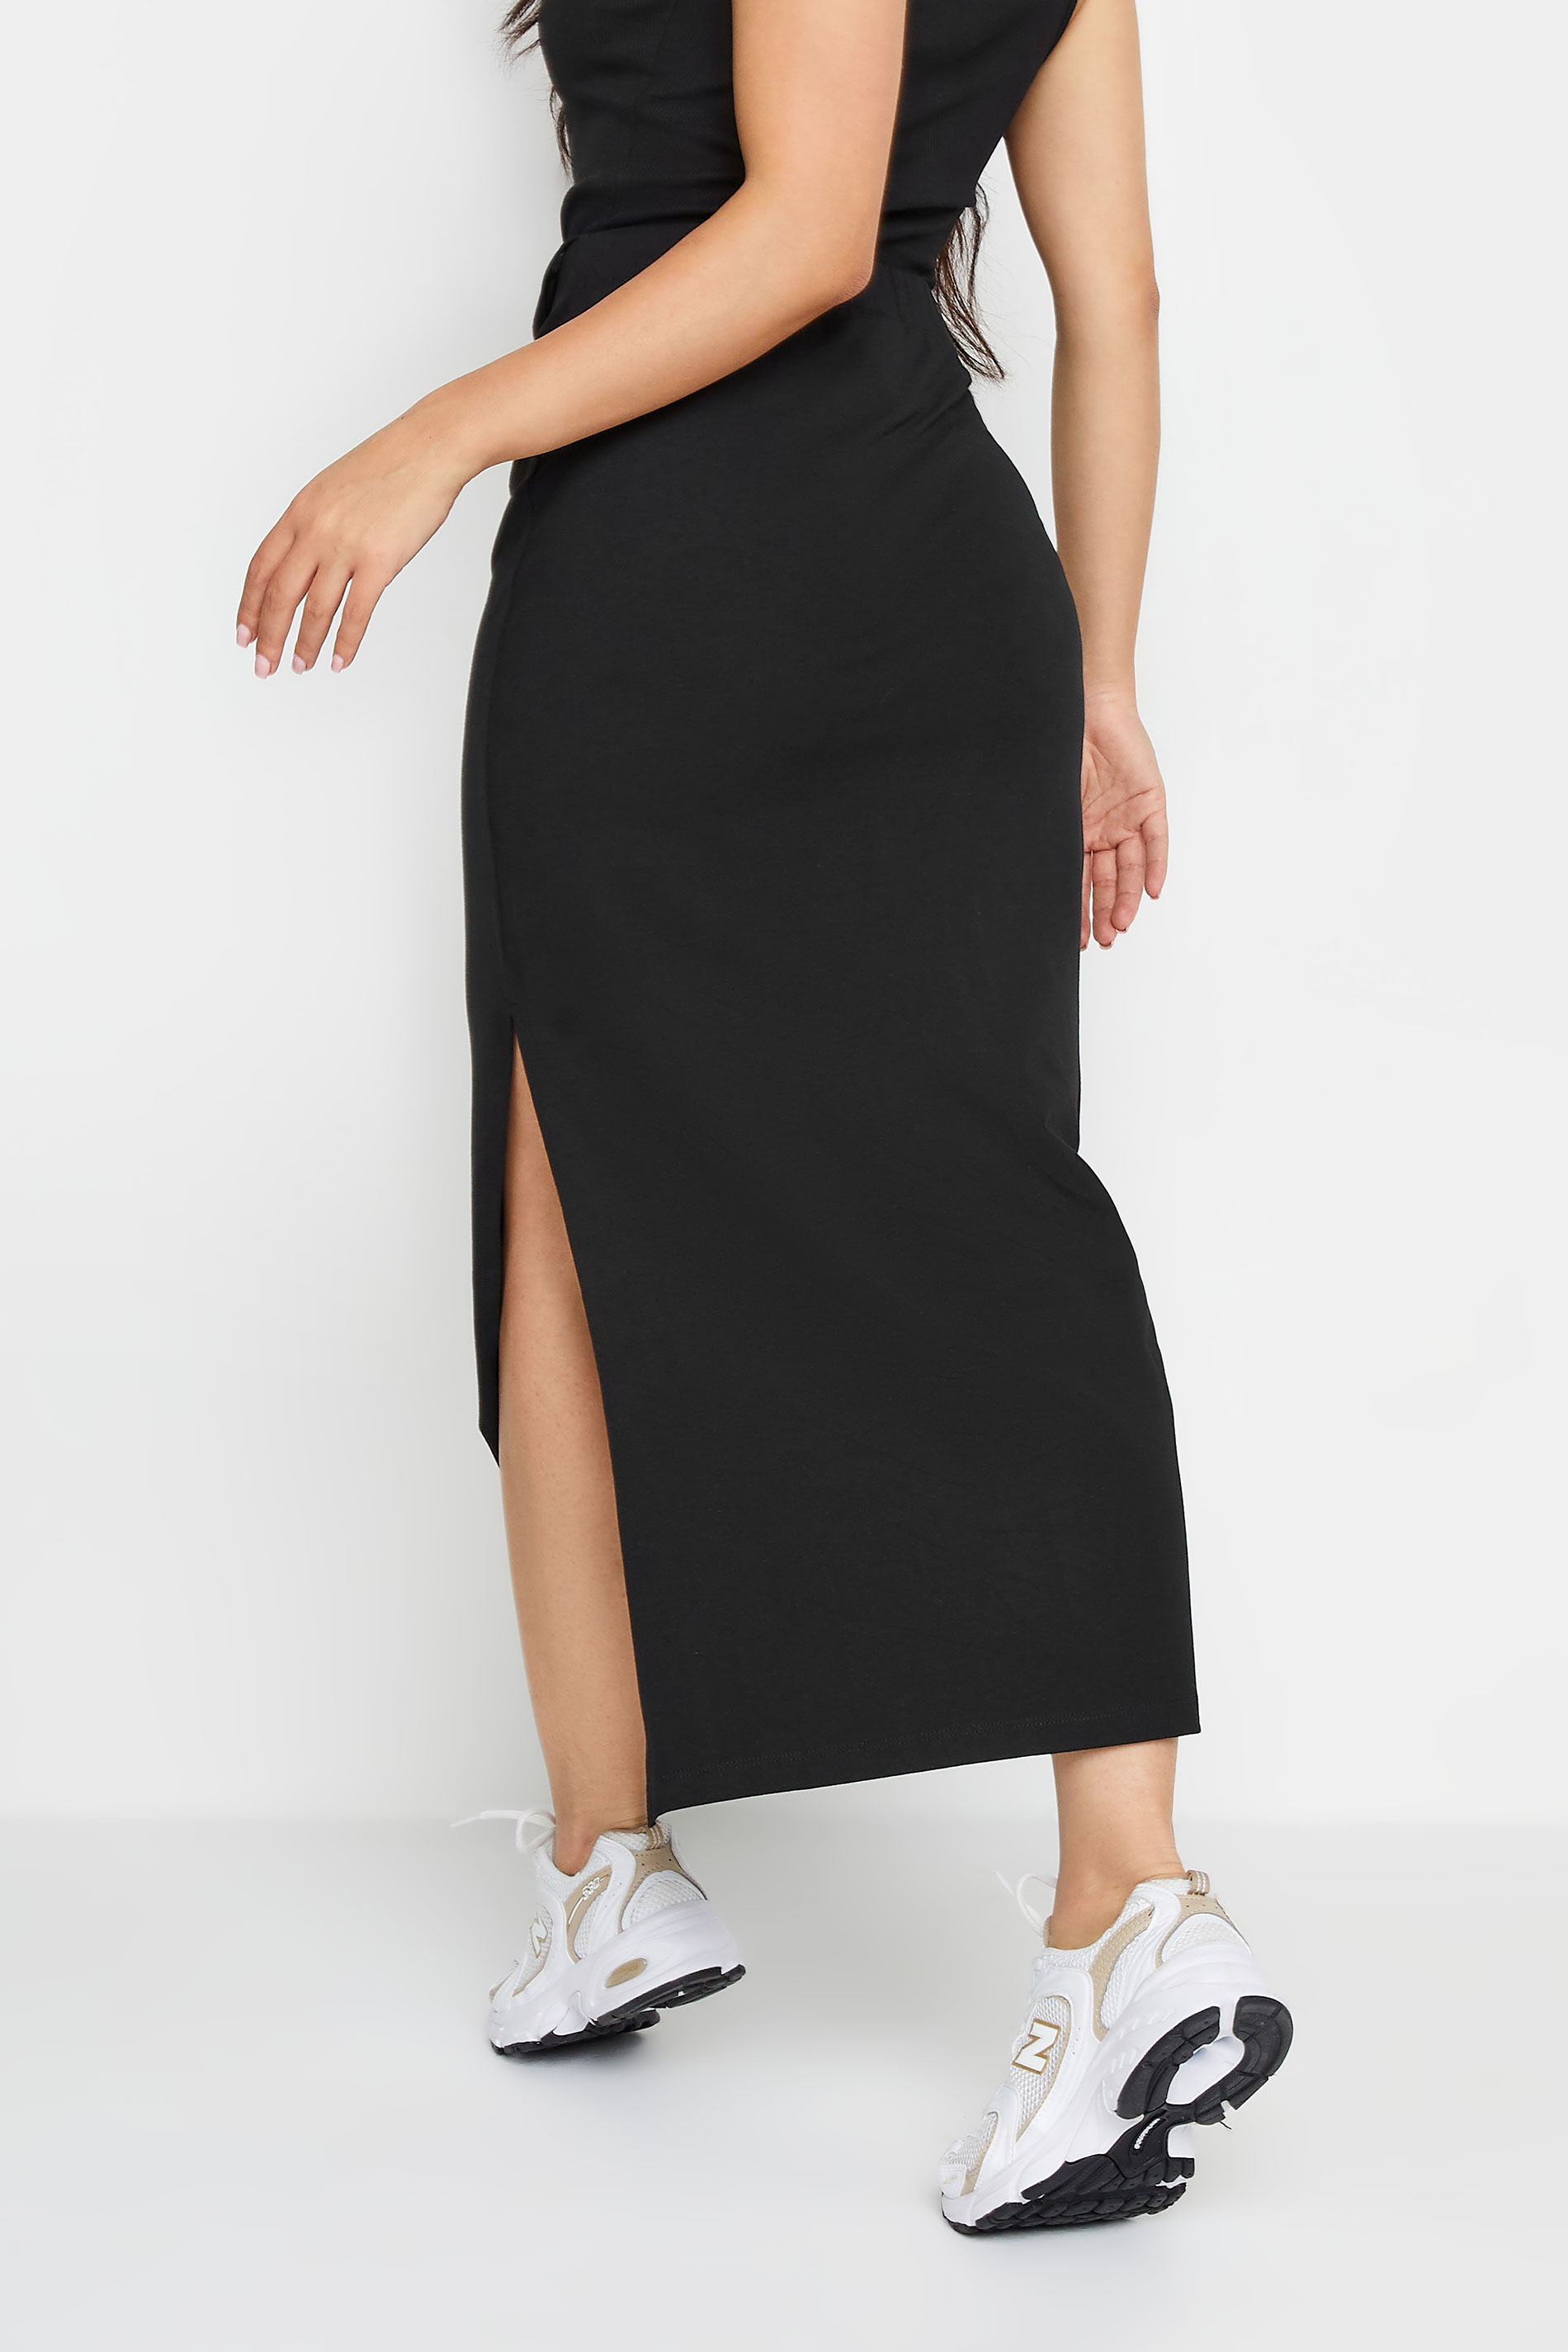 PixieGirl Petite Women's Black Side Split Maxi Skirt | PixieGirl 2